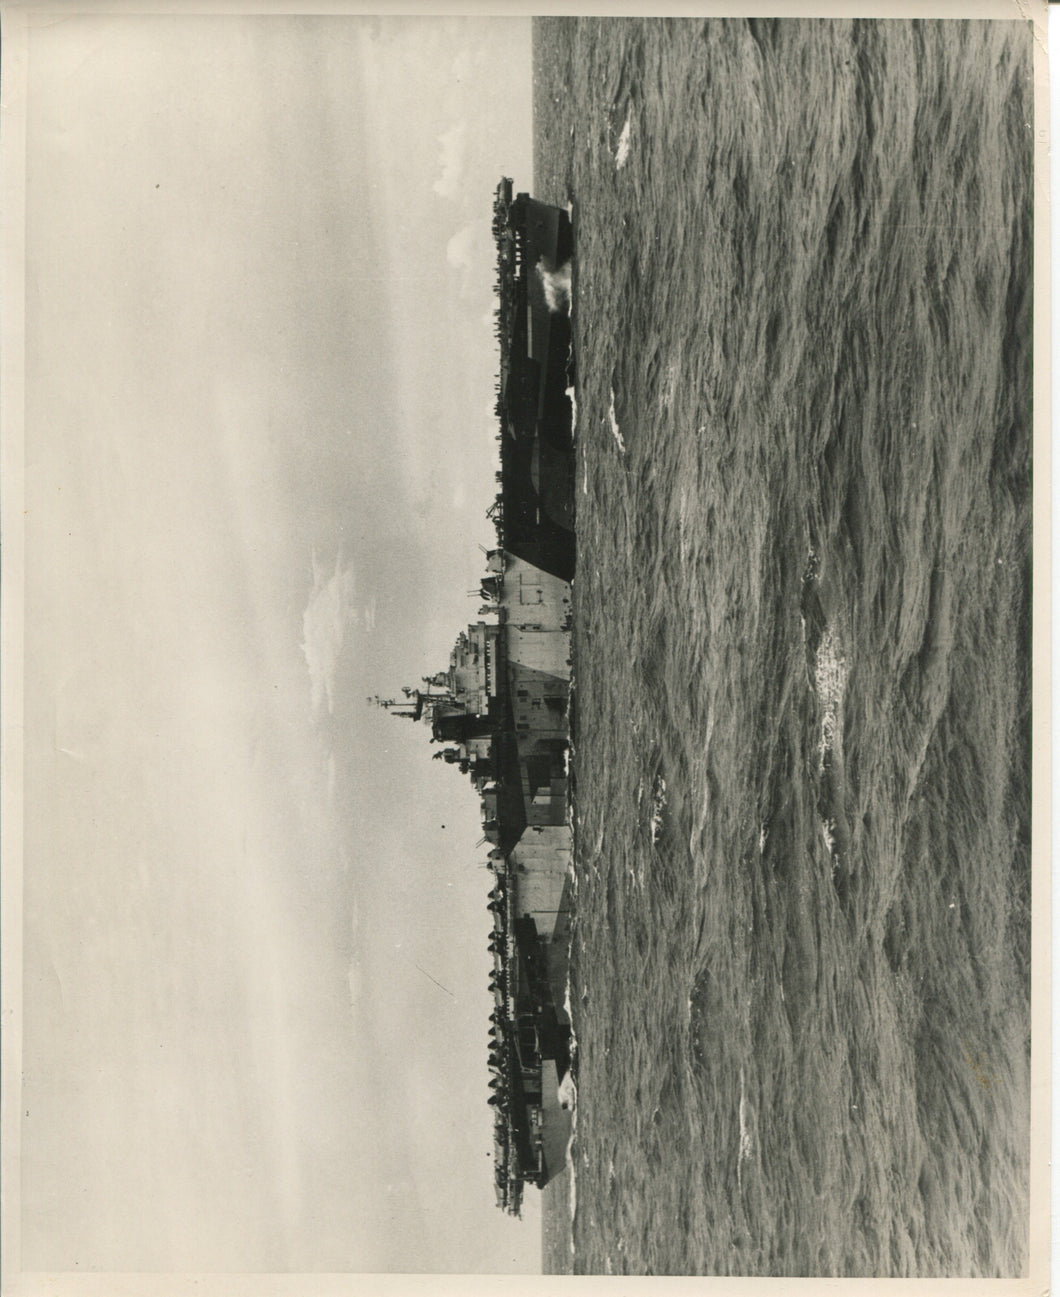 Official Navy Photo of WWII era USS Franklin (CV-13) Aircraft Carrier